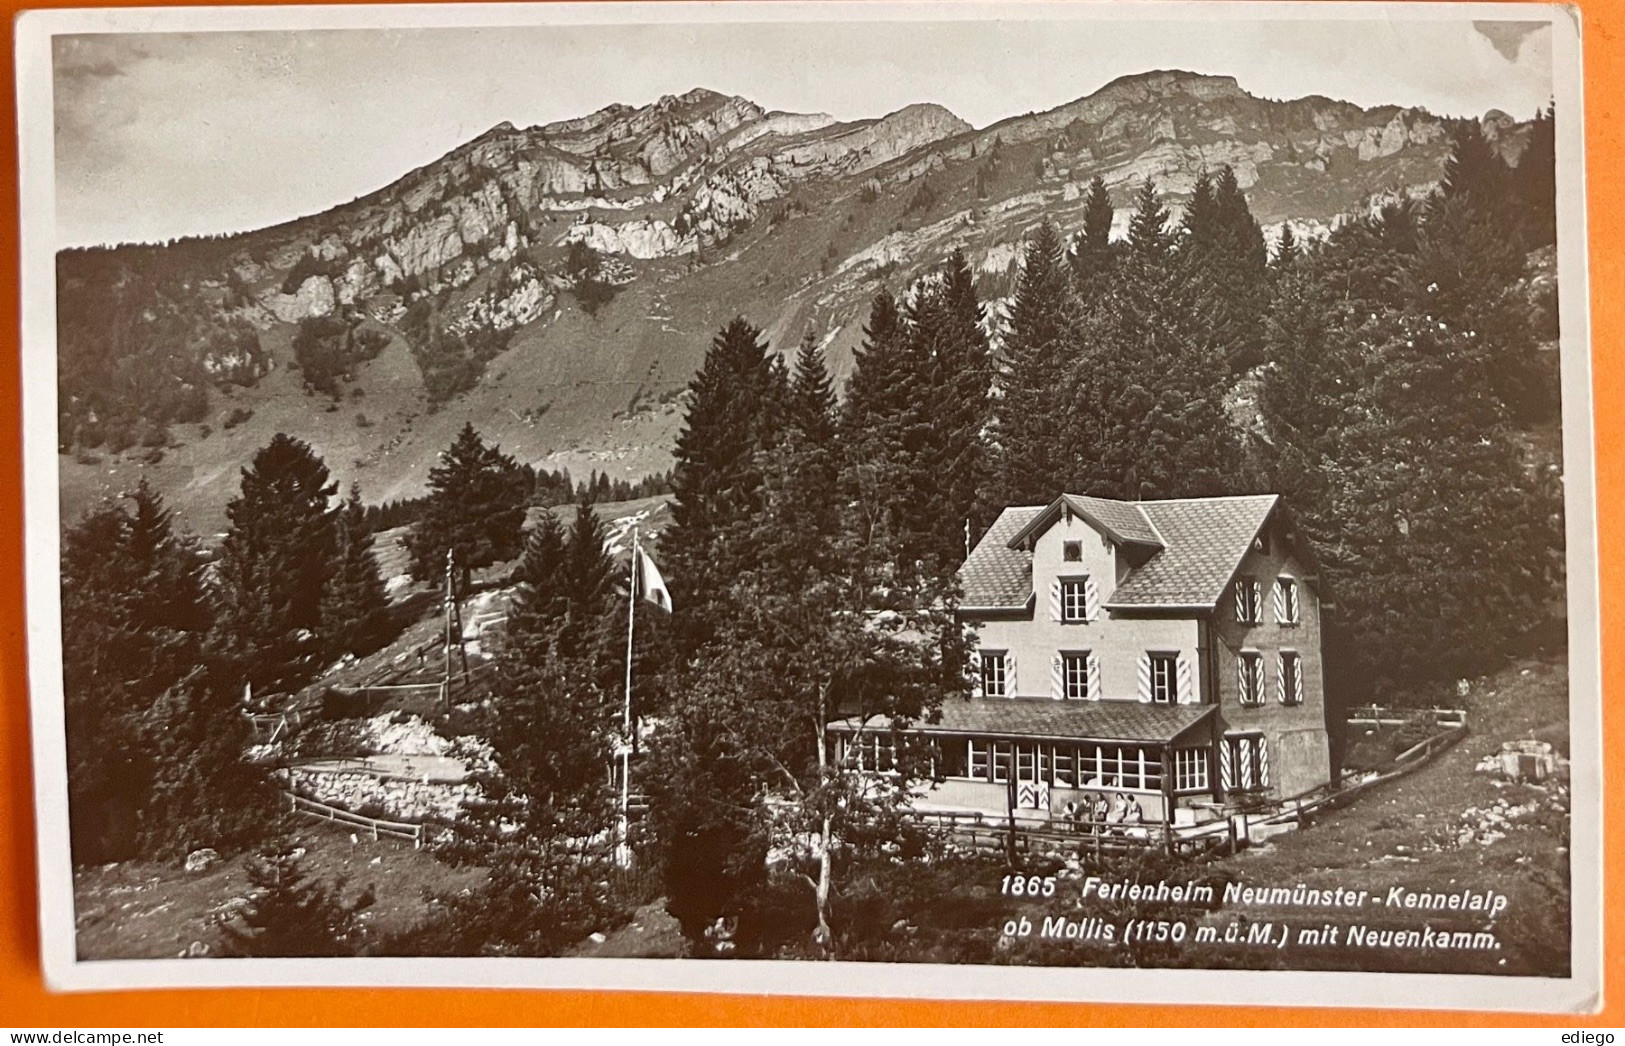 MOLLIS - Ferienheim Neumünster - Kennelalp 1940 - Näfels